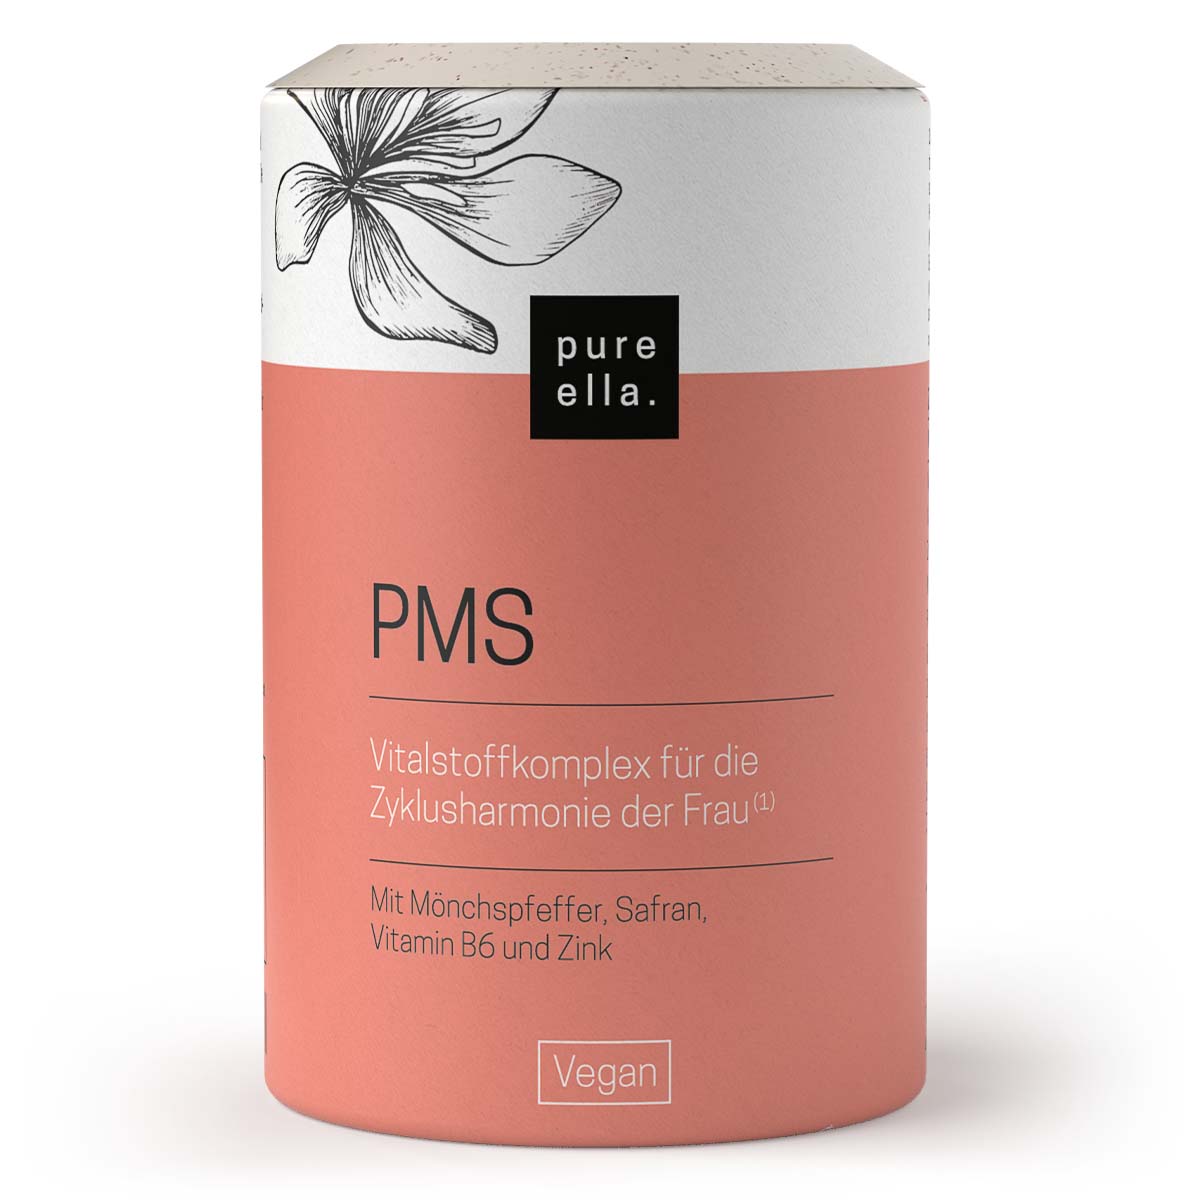 PMS Vitalstoffkomplex Produktverpackung